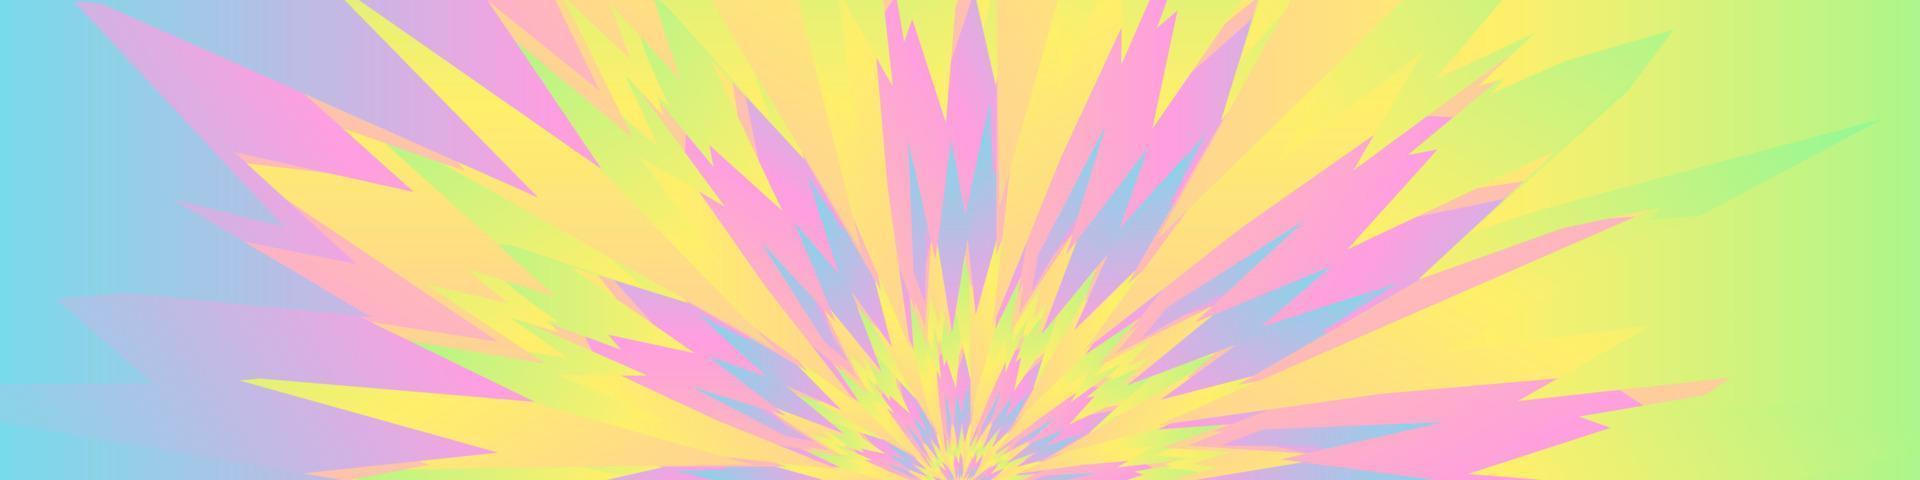 Abstract pastel swirl background. Tie dye pattern. Vector illustration